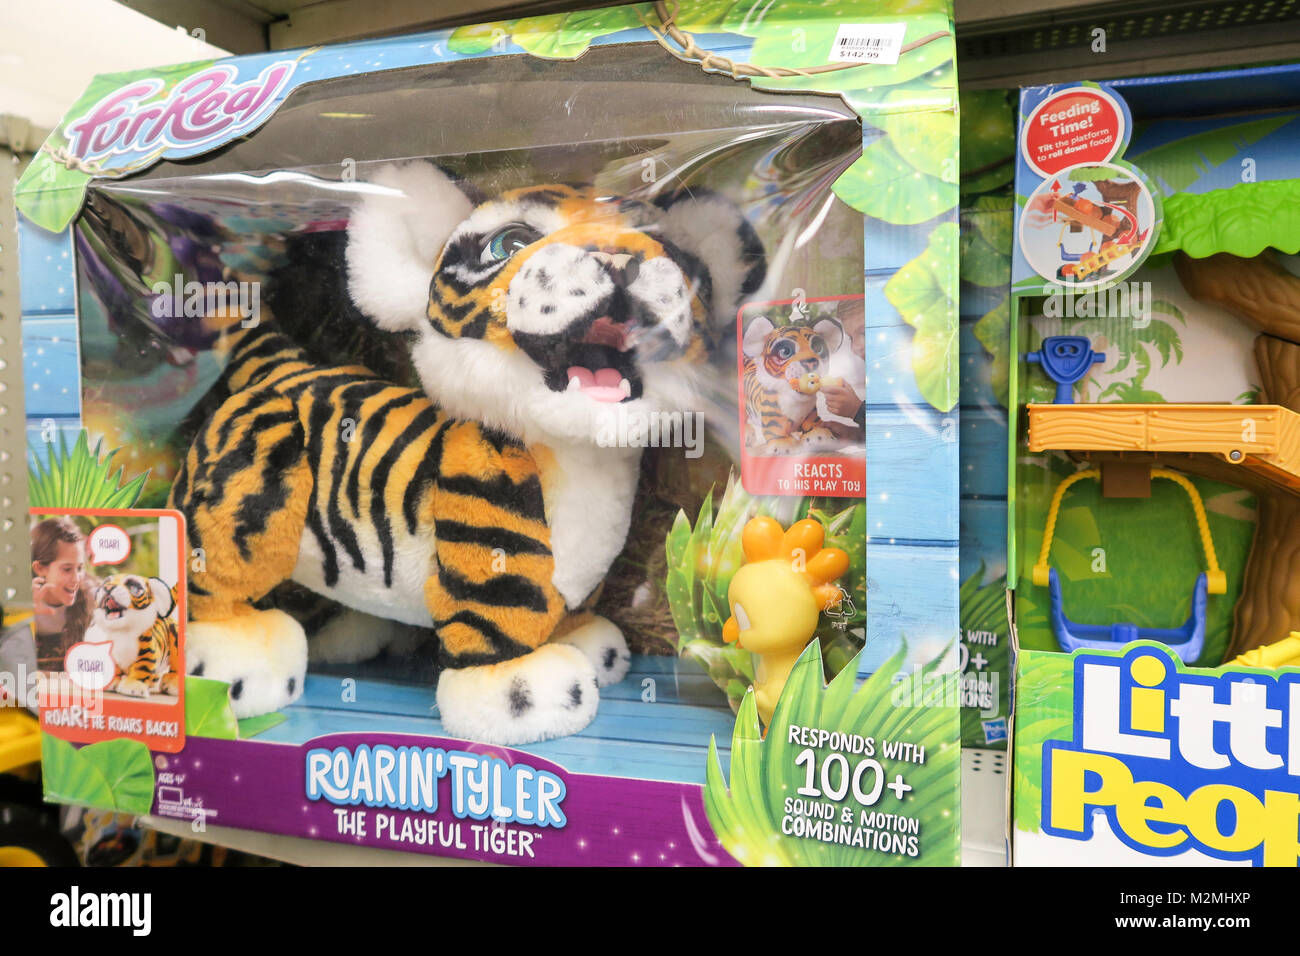 furreal tiger toy